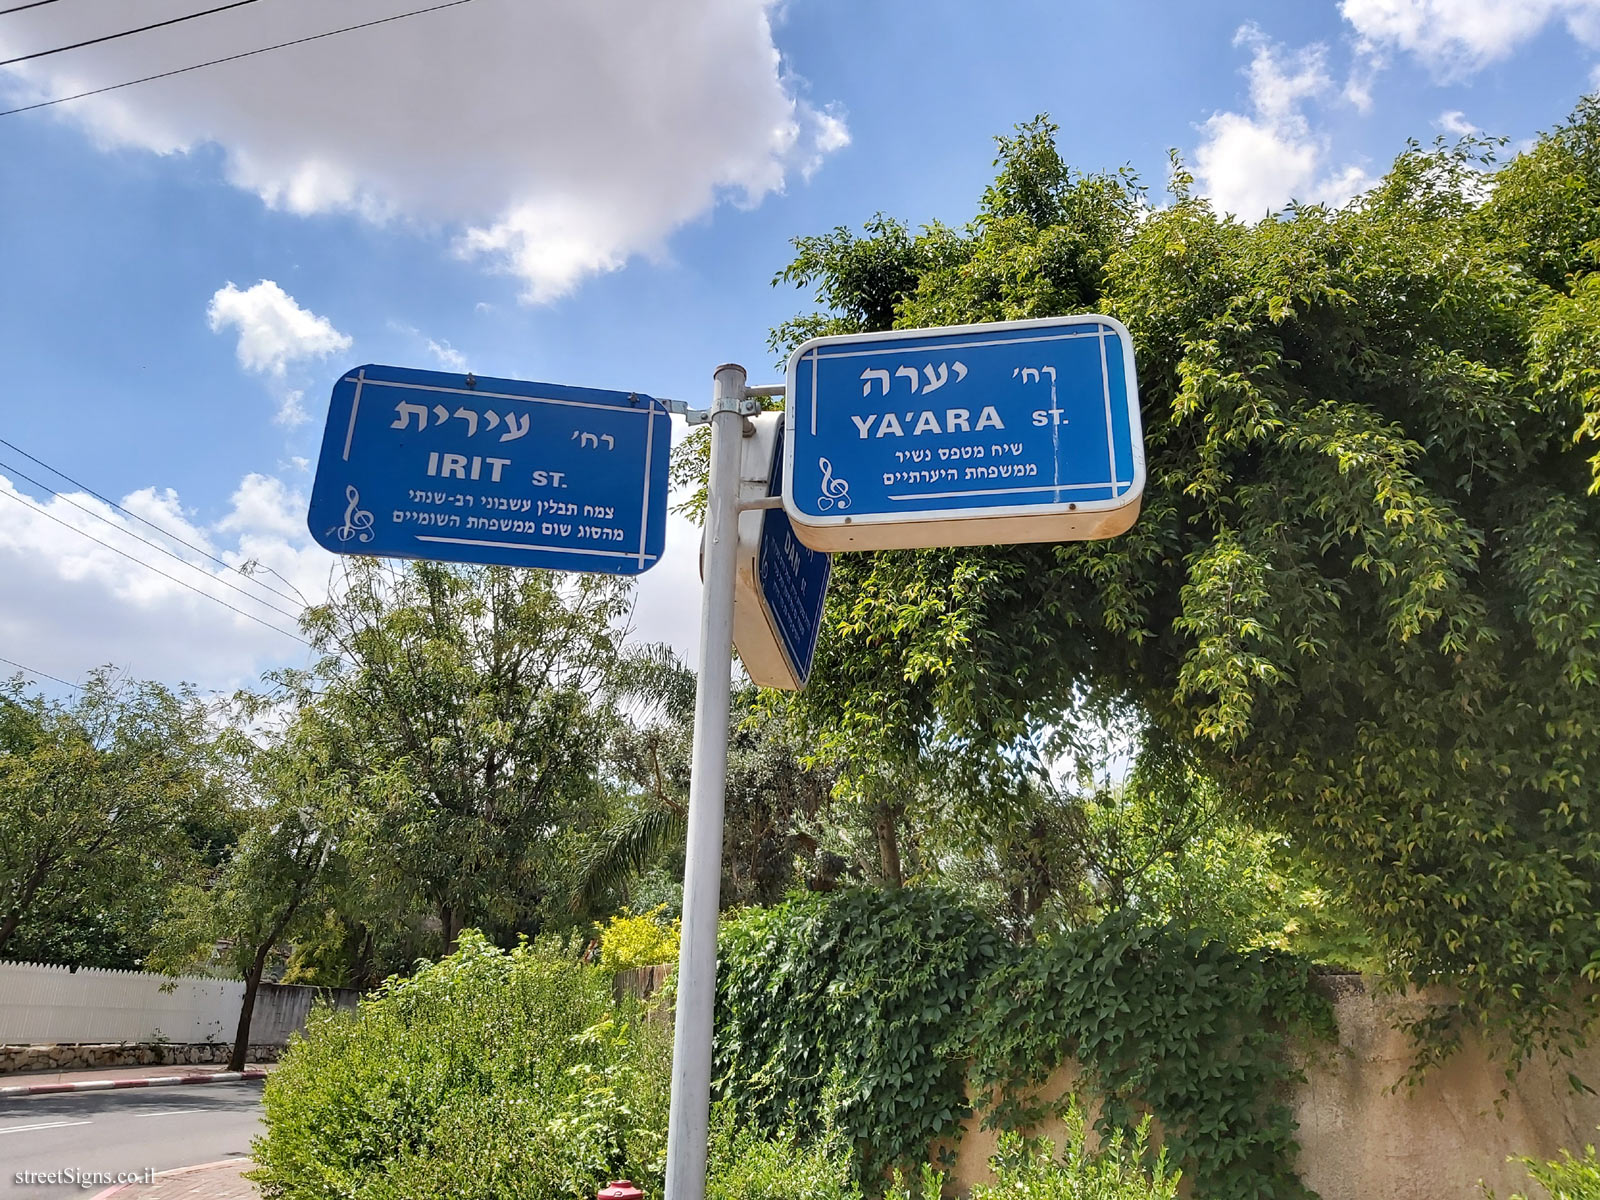 The intersection of the Irit, Yaara and Dan streets, Rosh Haayin, Israel